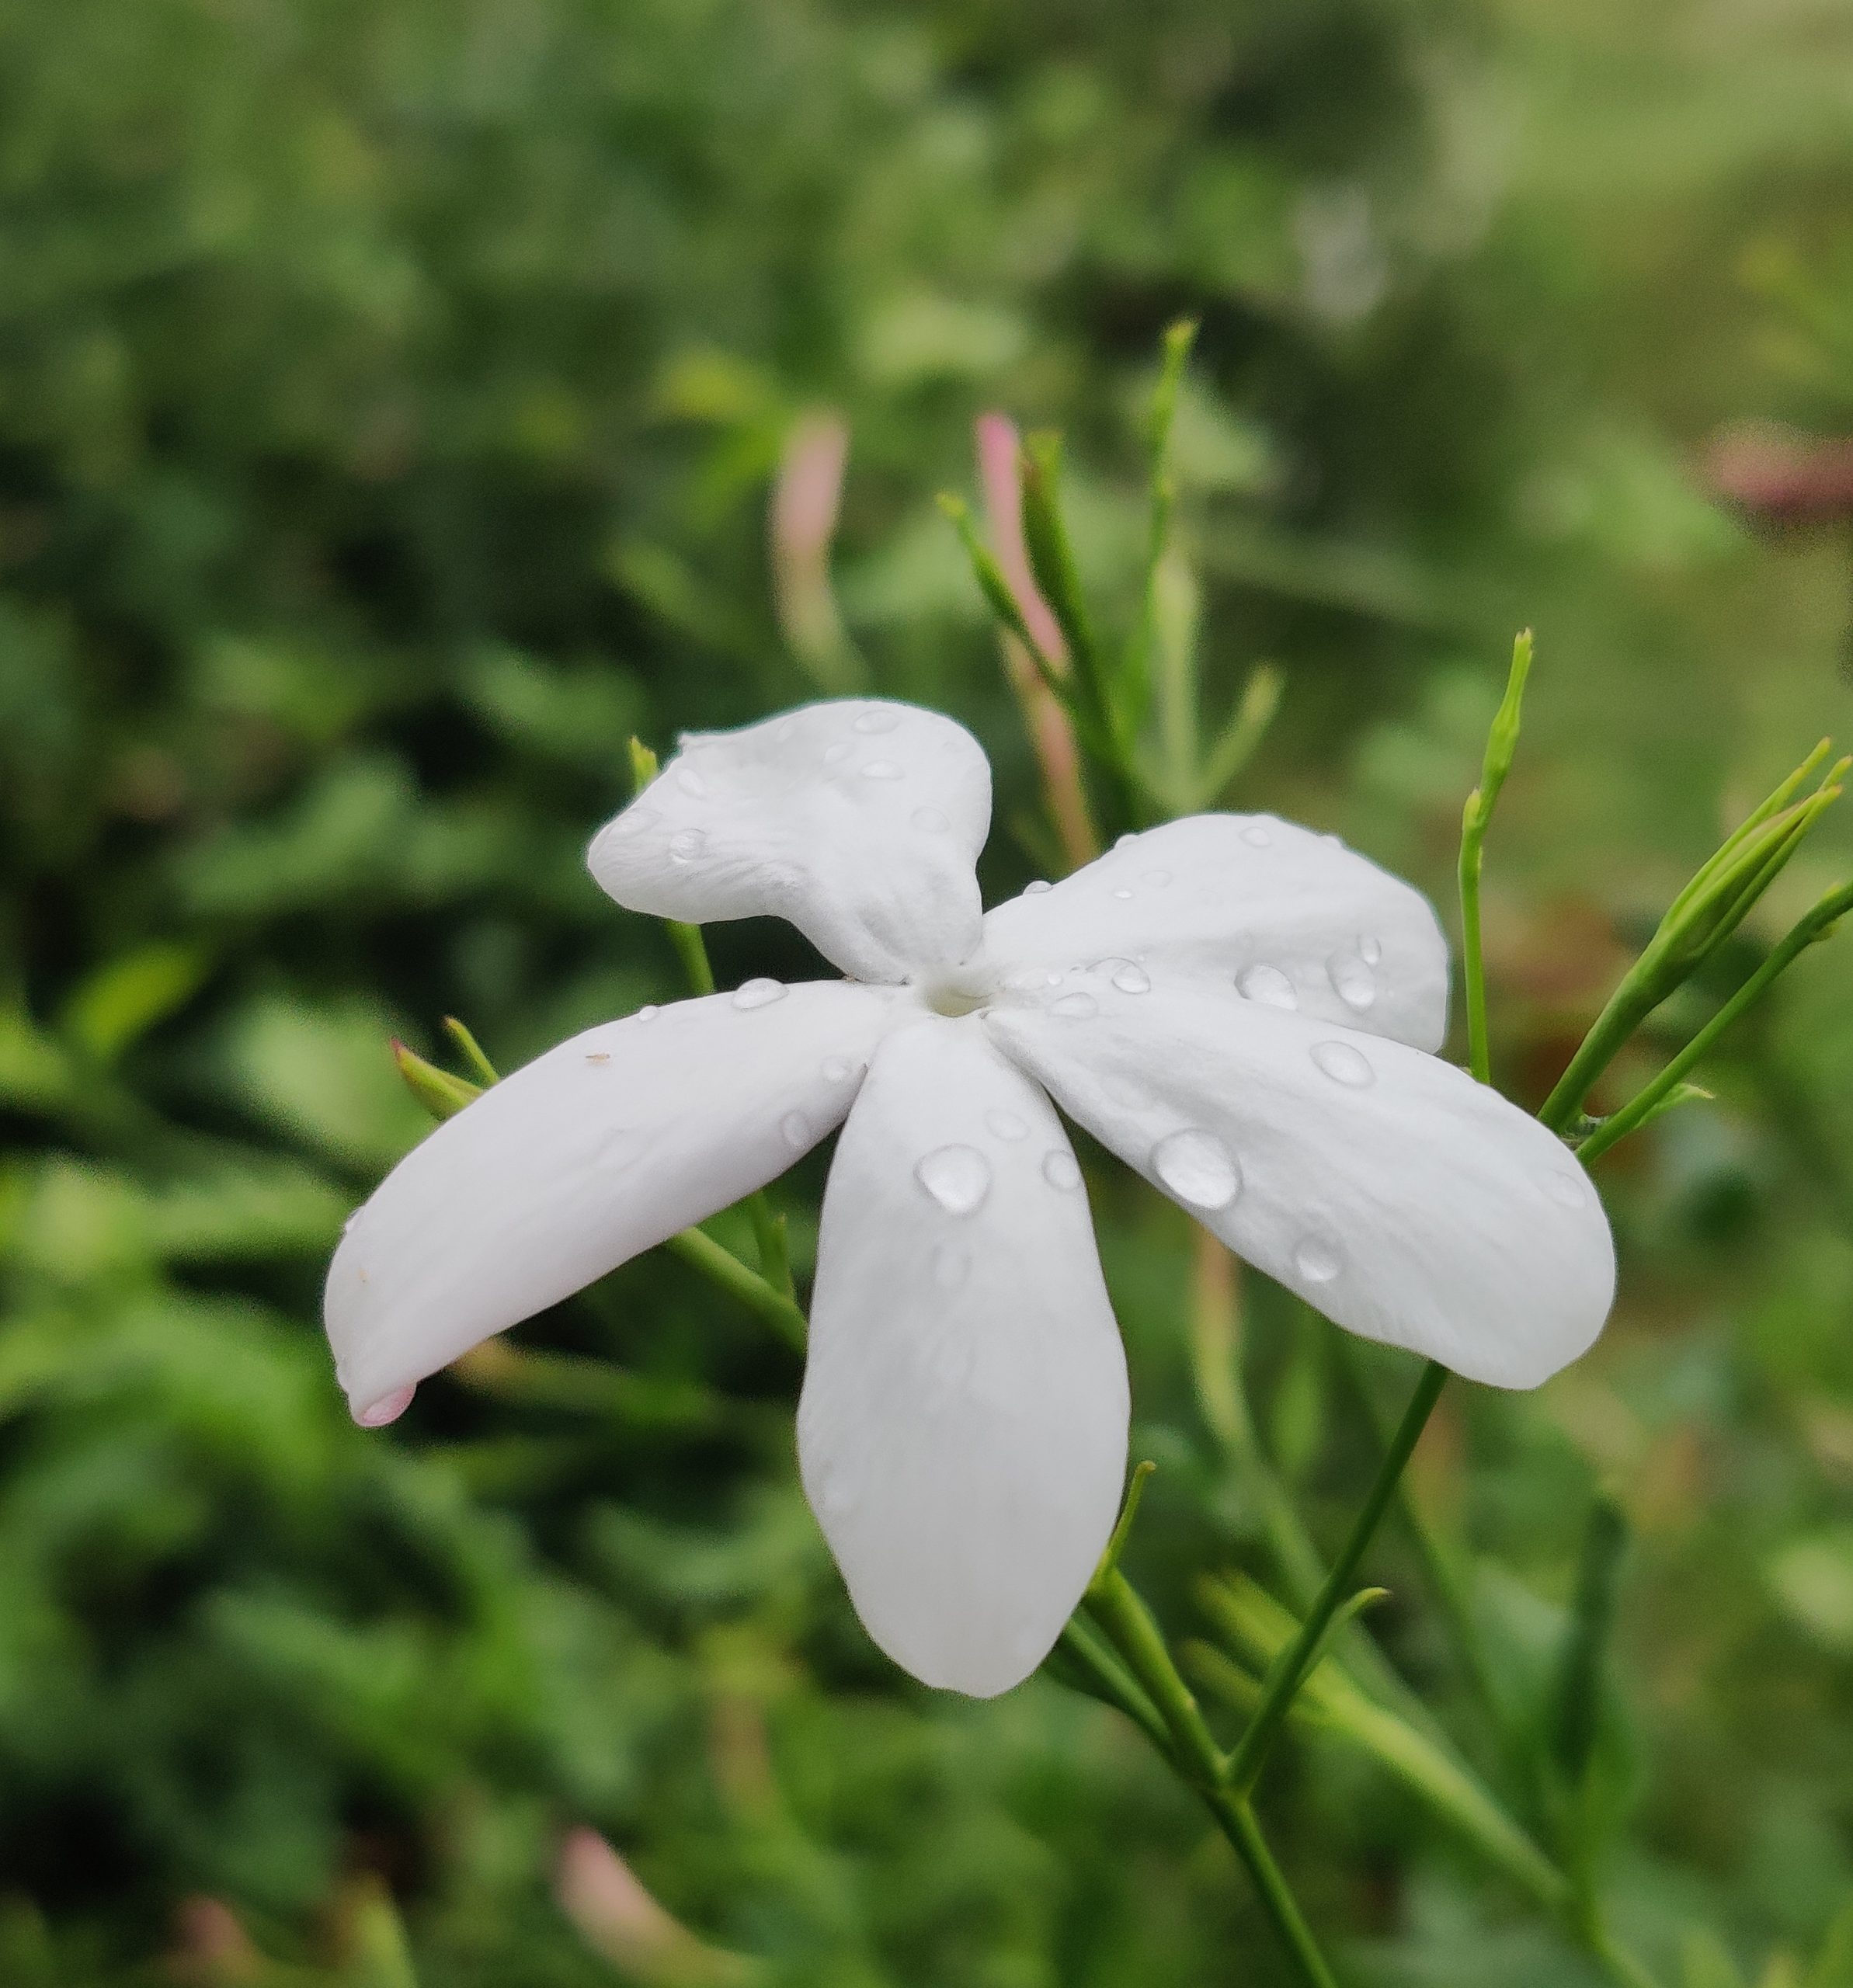 Water drops on Jasmine flower